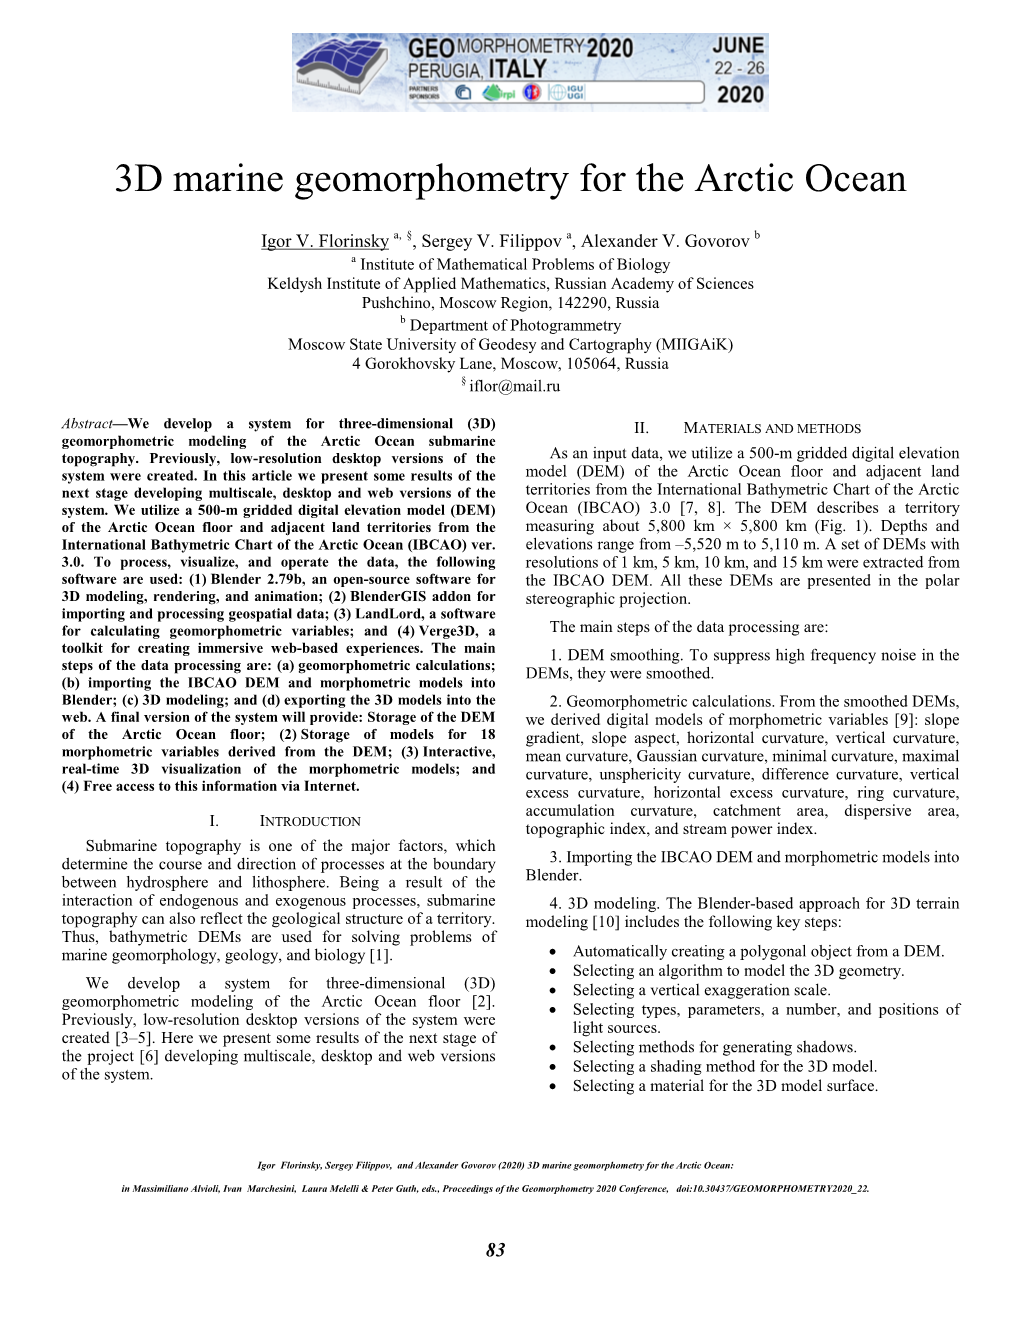 3D Marine Geomorphometry for the Arctic Ocean